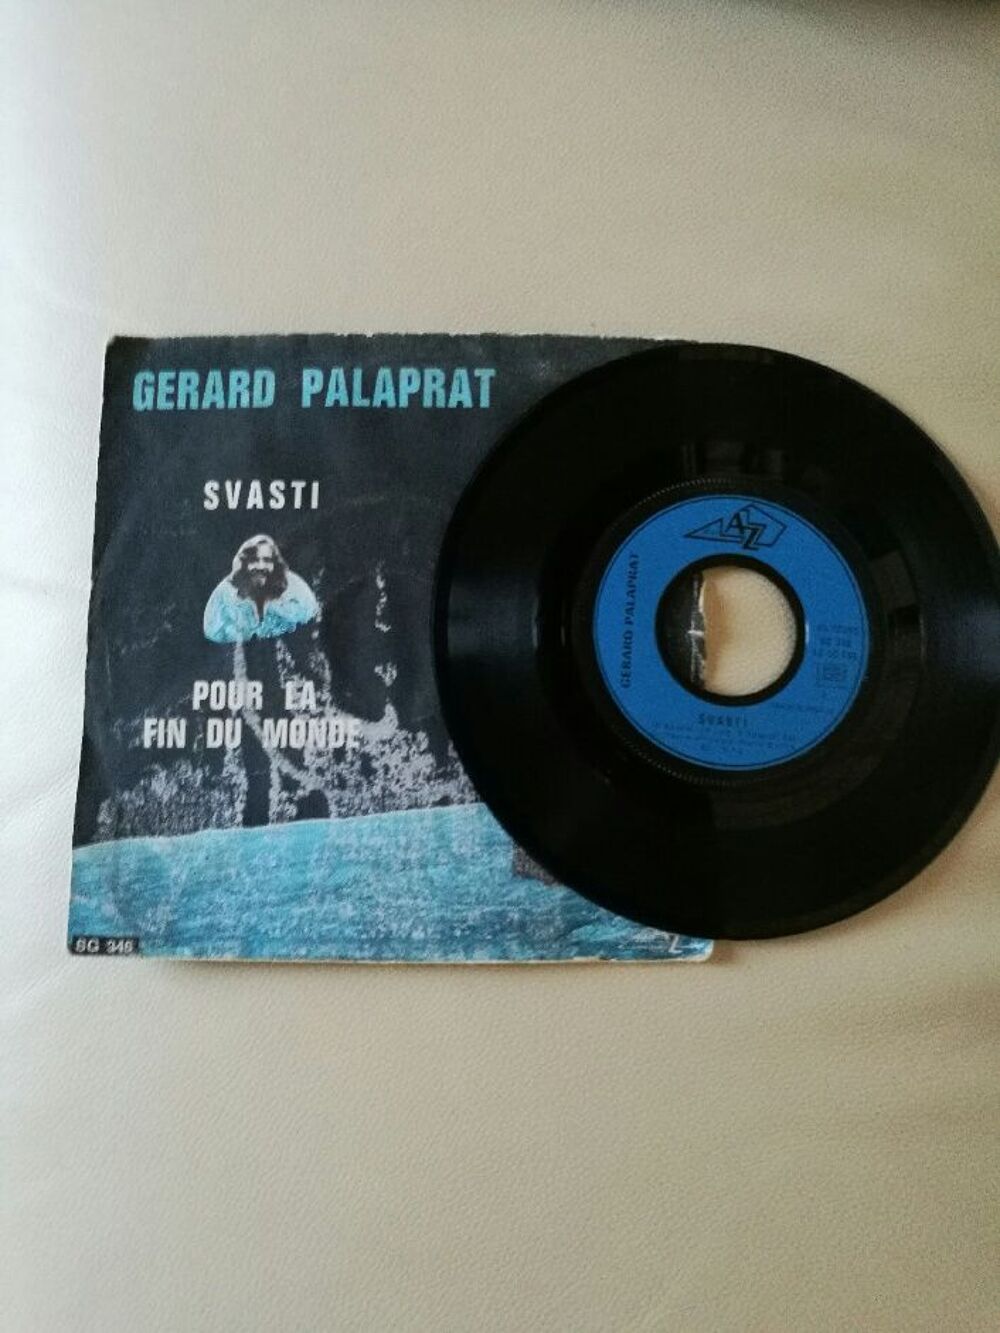 GERARD PALAPRAT Svasti (vinyle 45 T) CD et vinyles